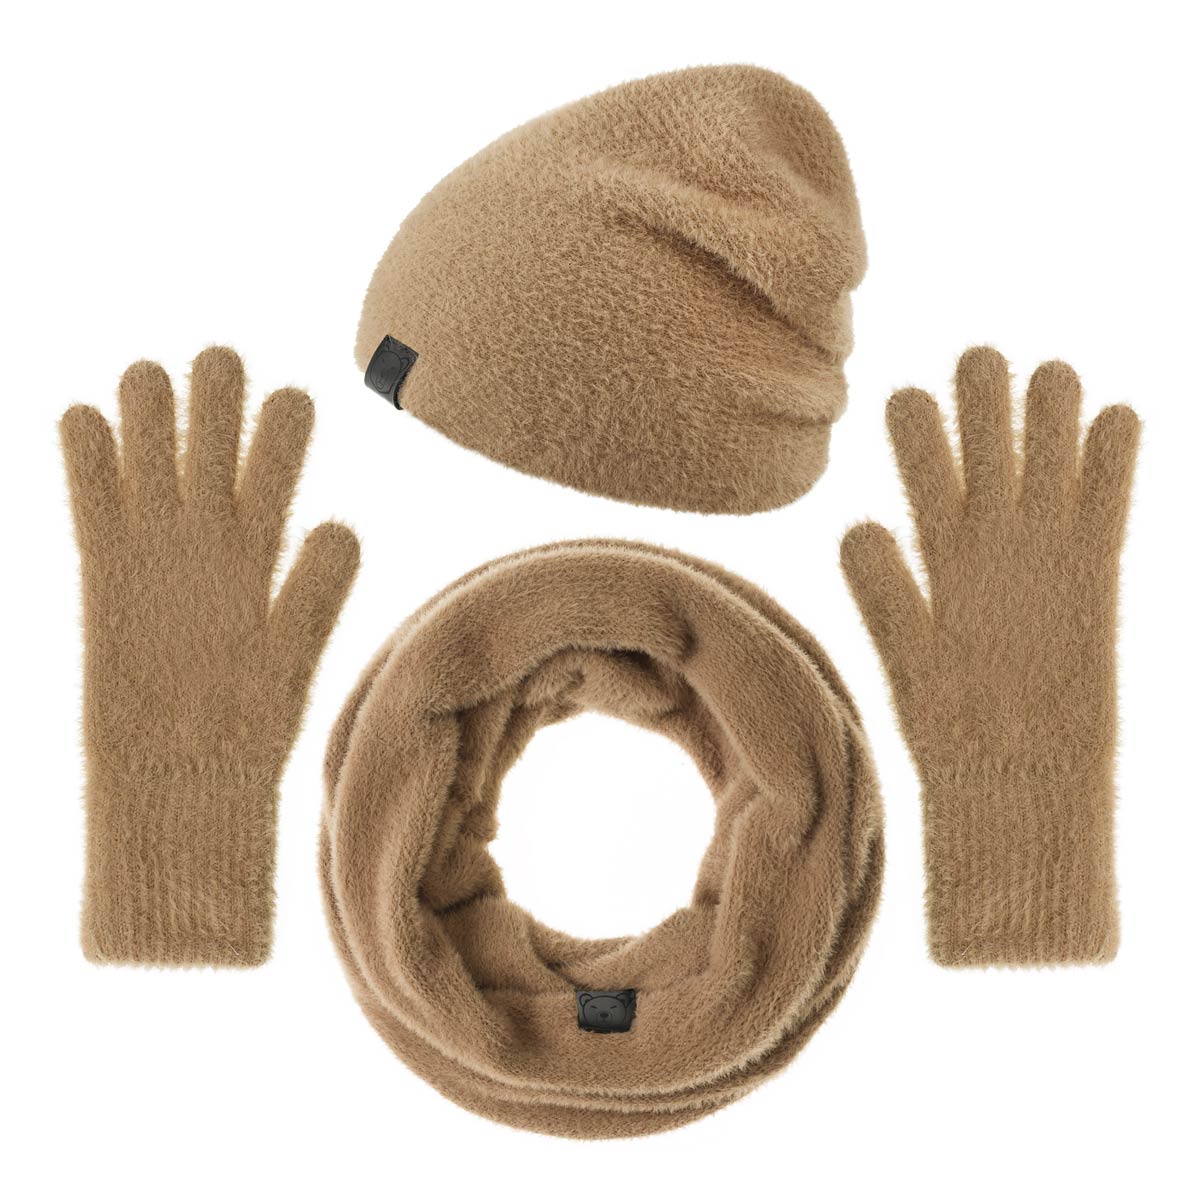 PK-00139_F12-1--_Ensemble-hiver-bonnet-snood-gants-marron-clair